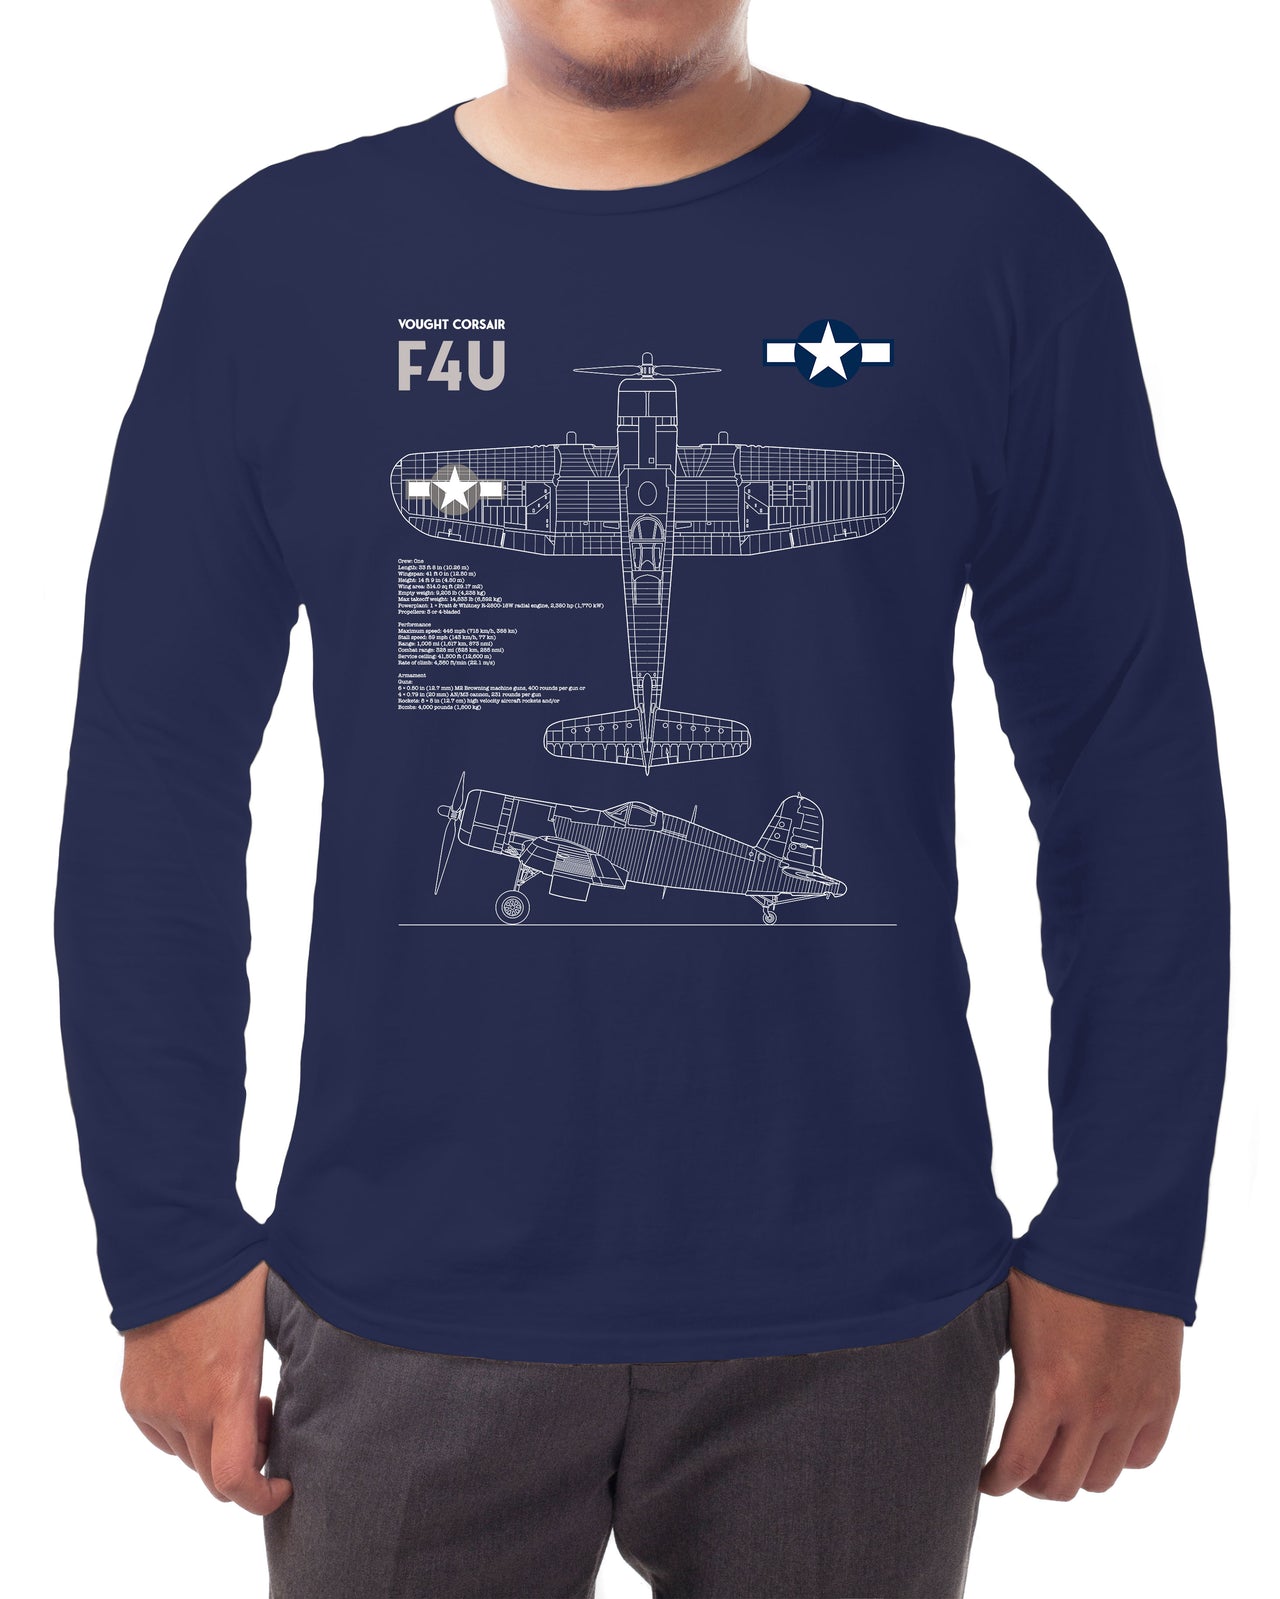 F4U Corsair - Long-sleeve T-shirt